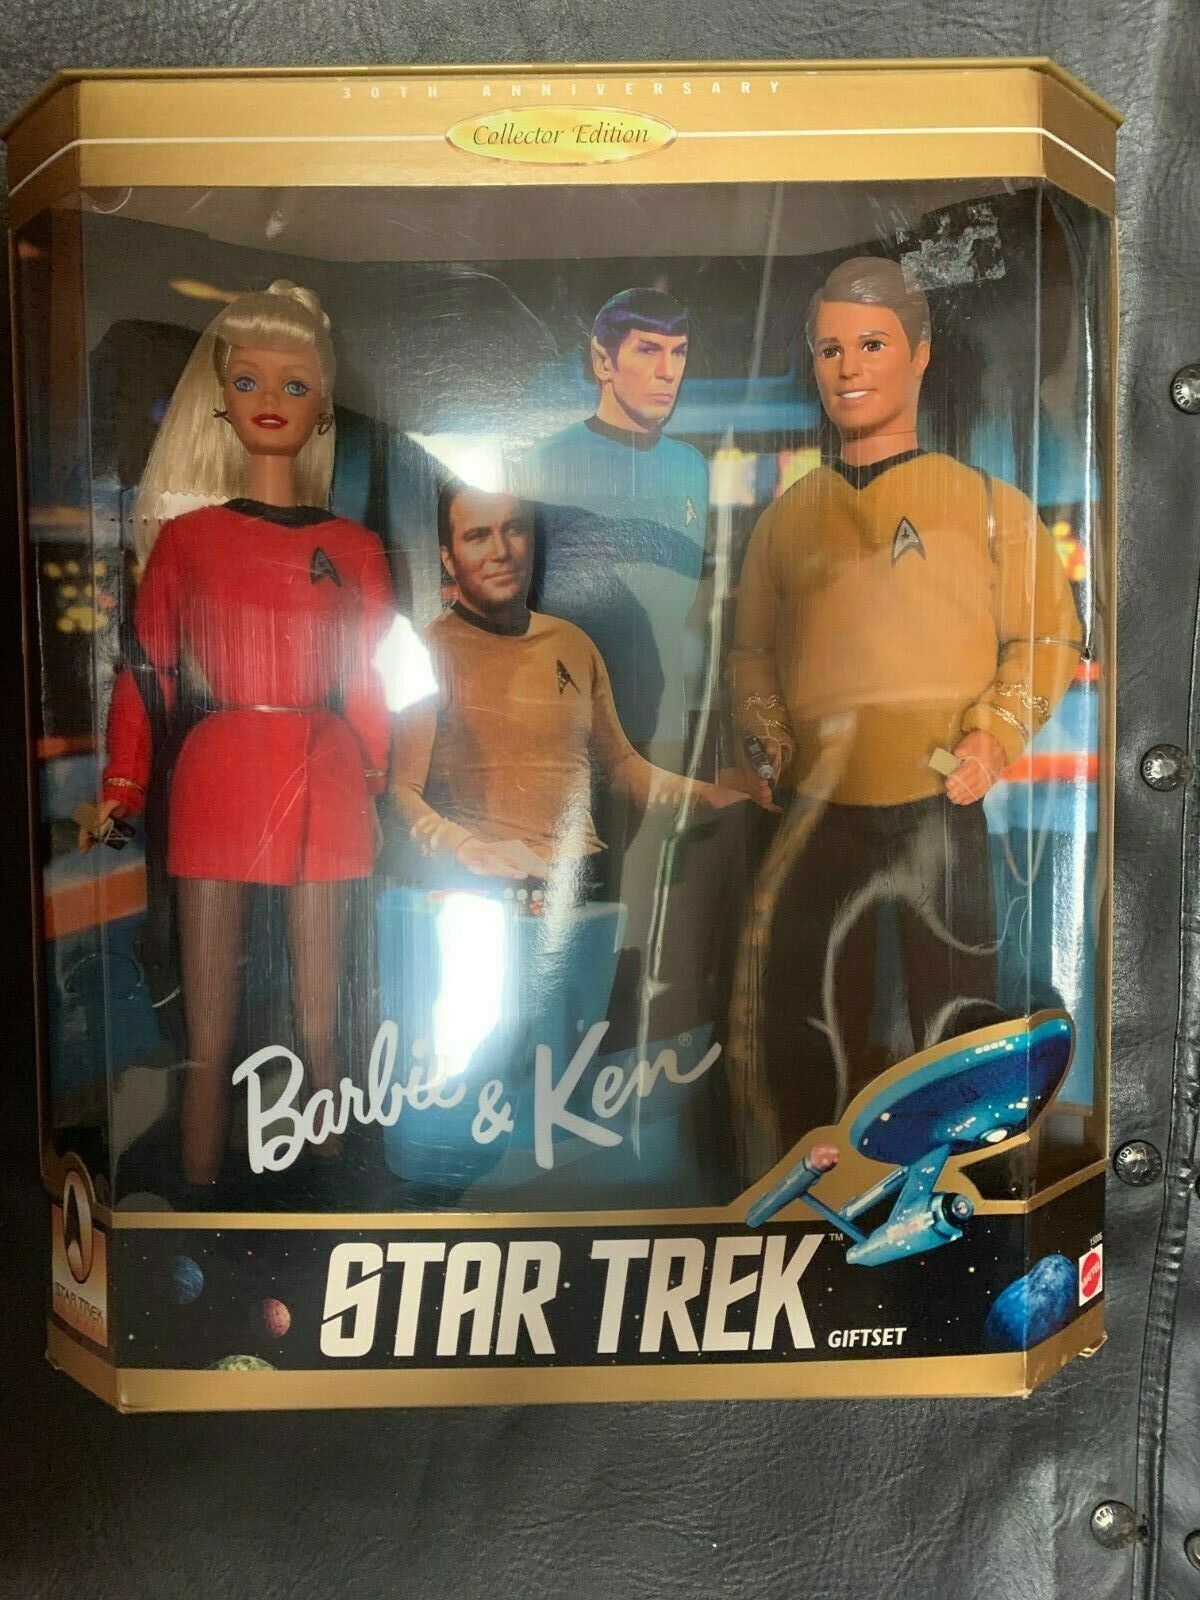 1996 Star Trek Gift Set Barbie & Ken Barbie 30th Anniversary Collector Edition